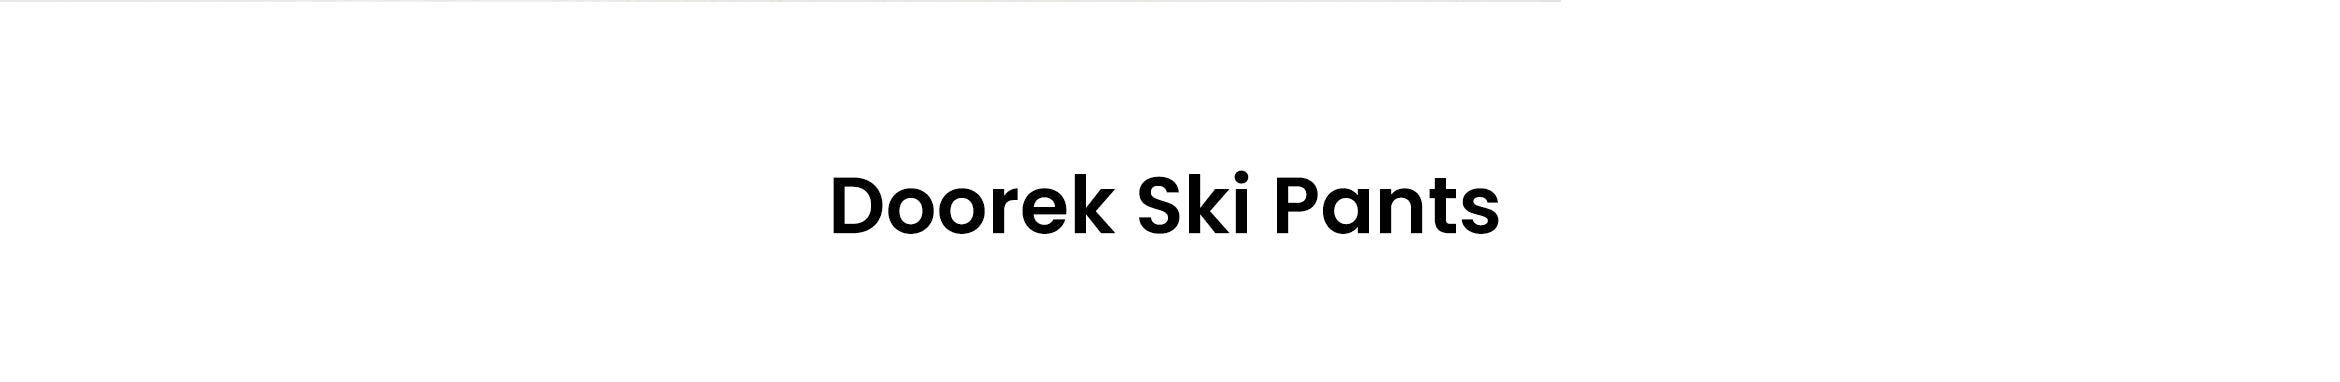 1. Doorek ski pants